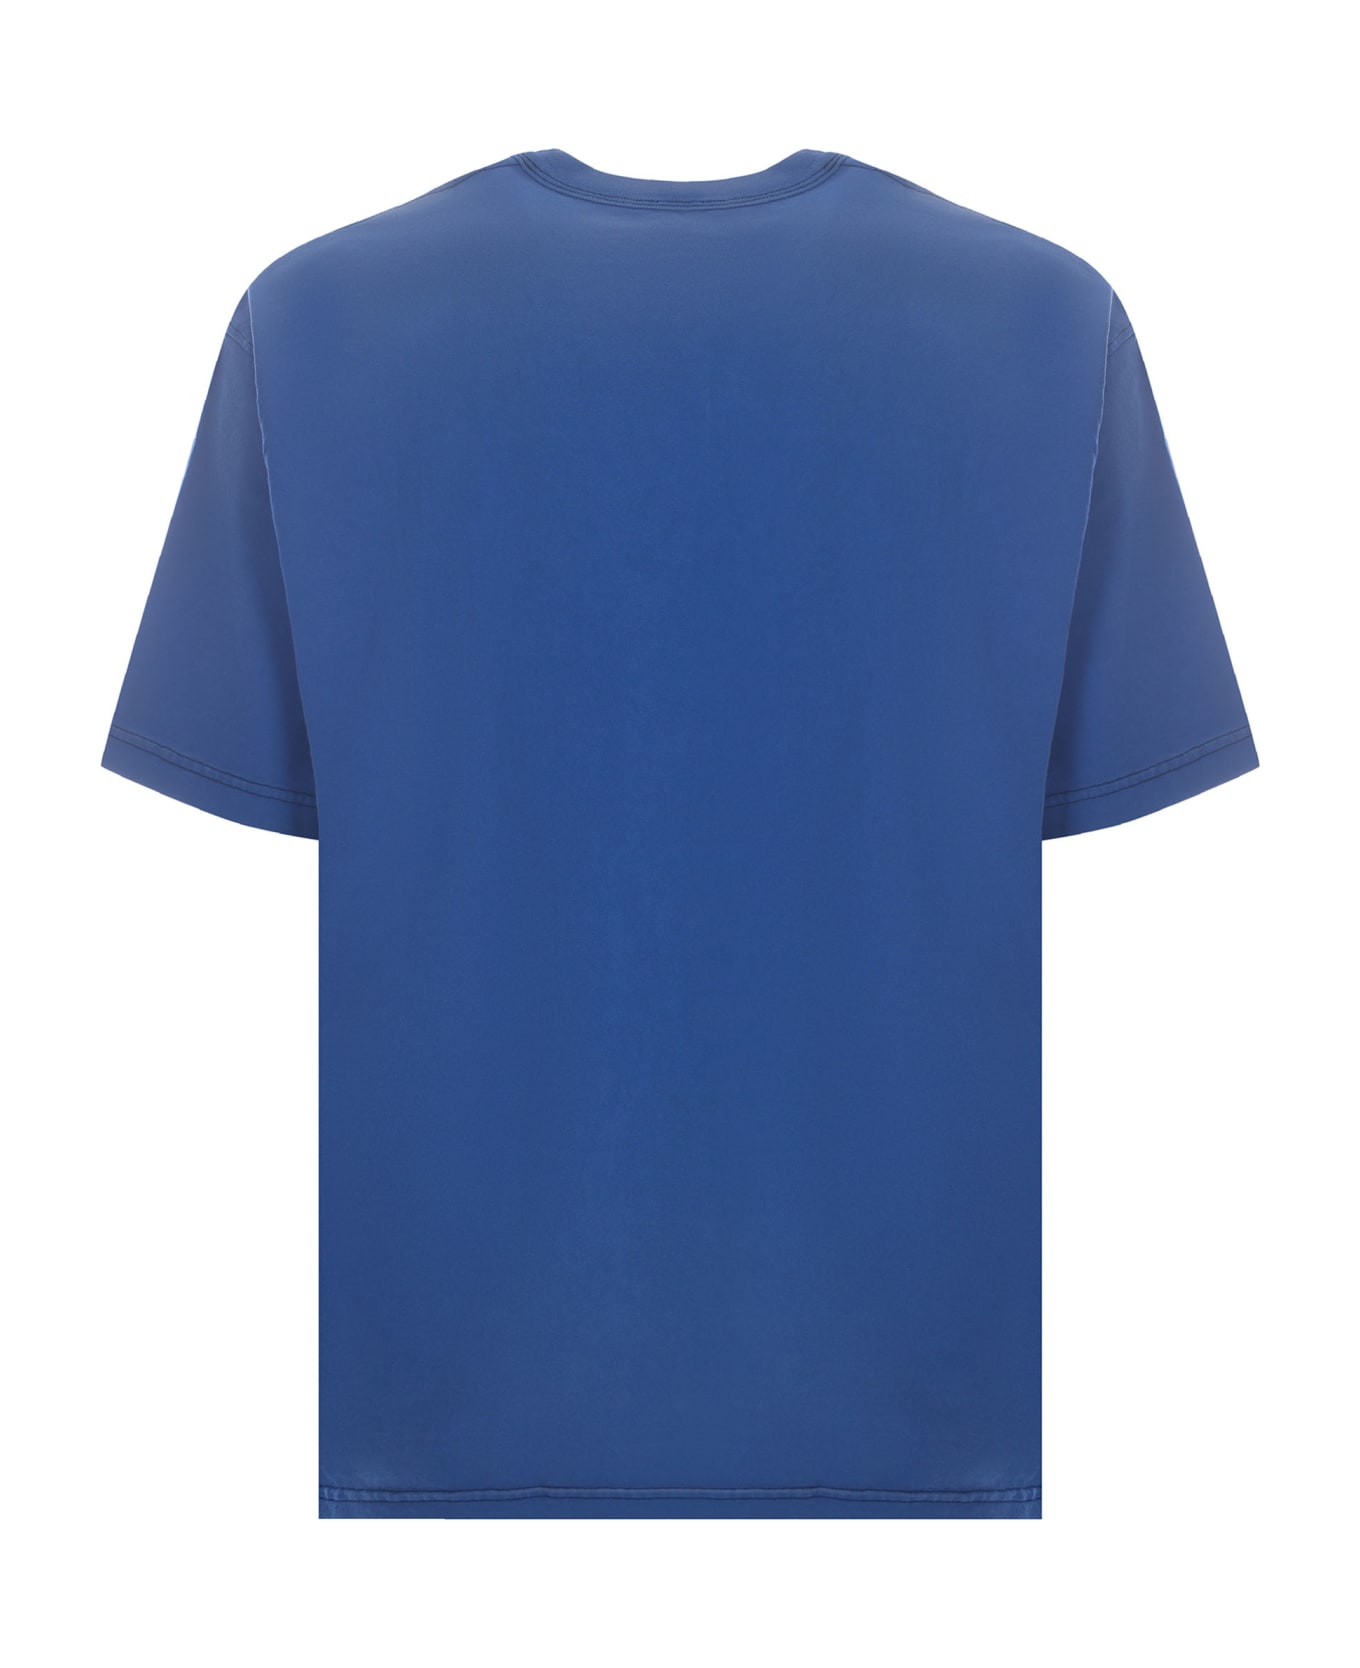 Diesel T-shirt Diesel "t-wash-n" Made Of Cotton Jersey - Bluette